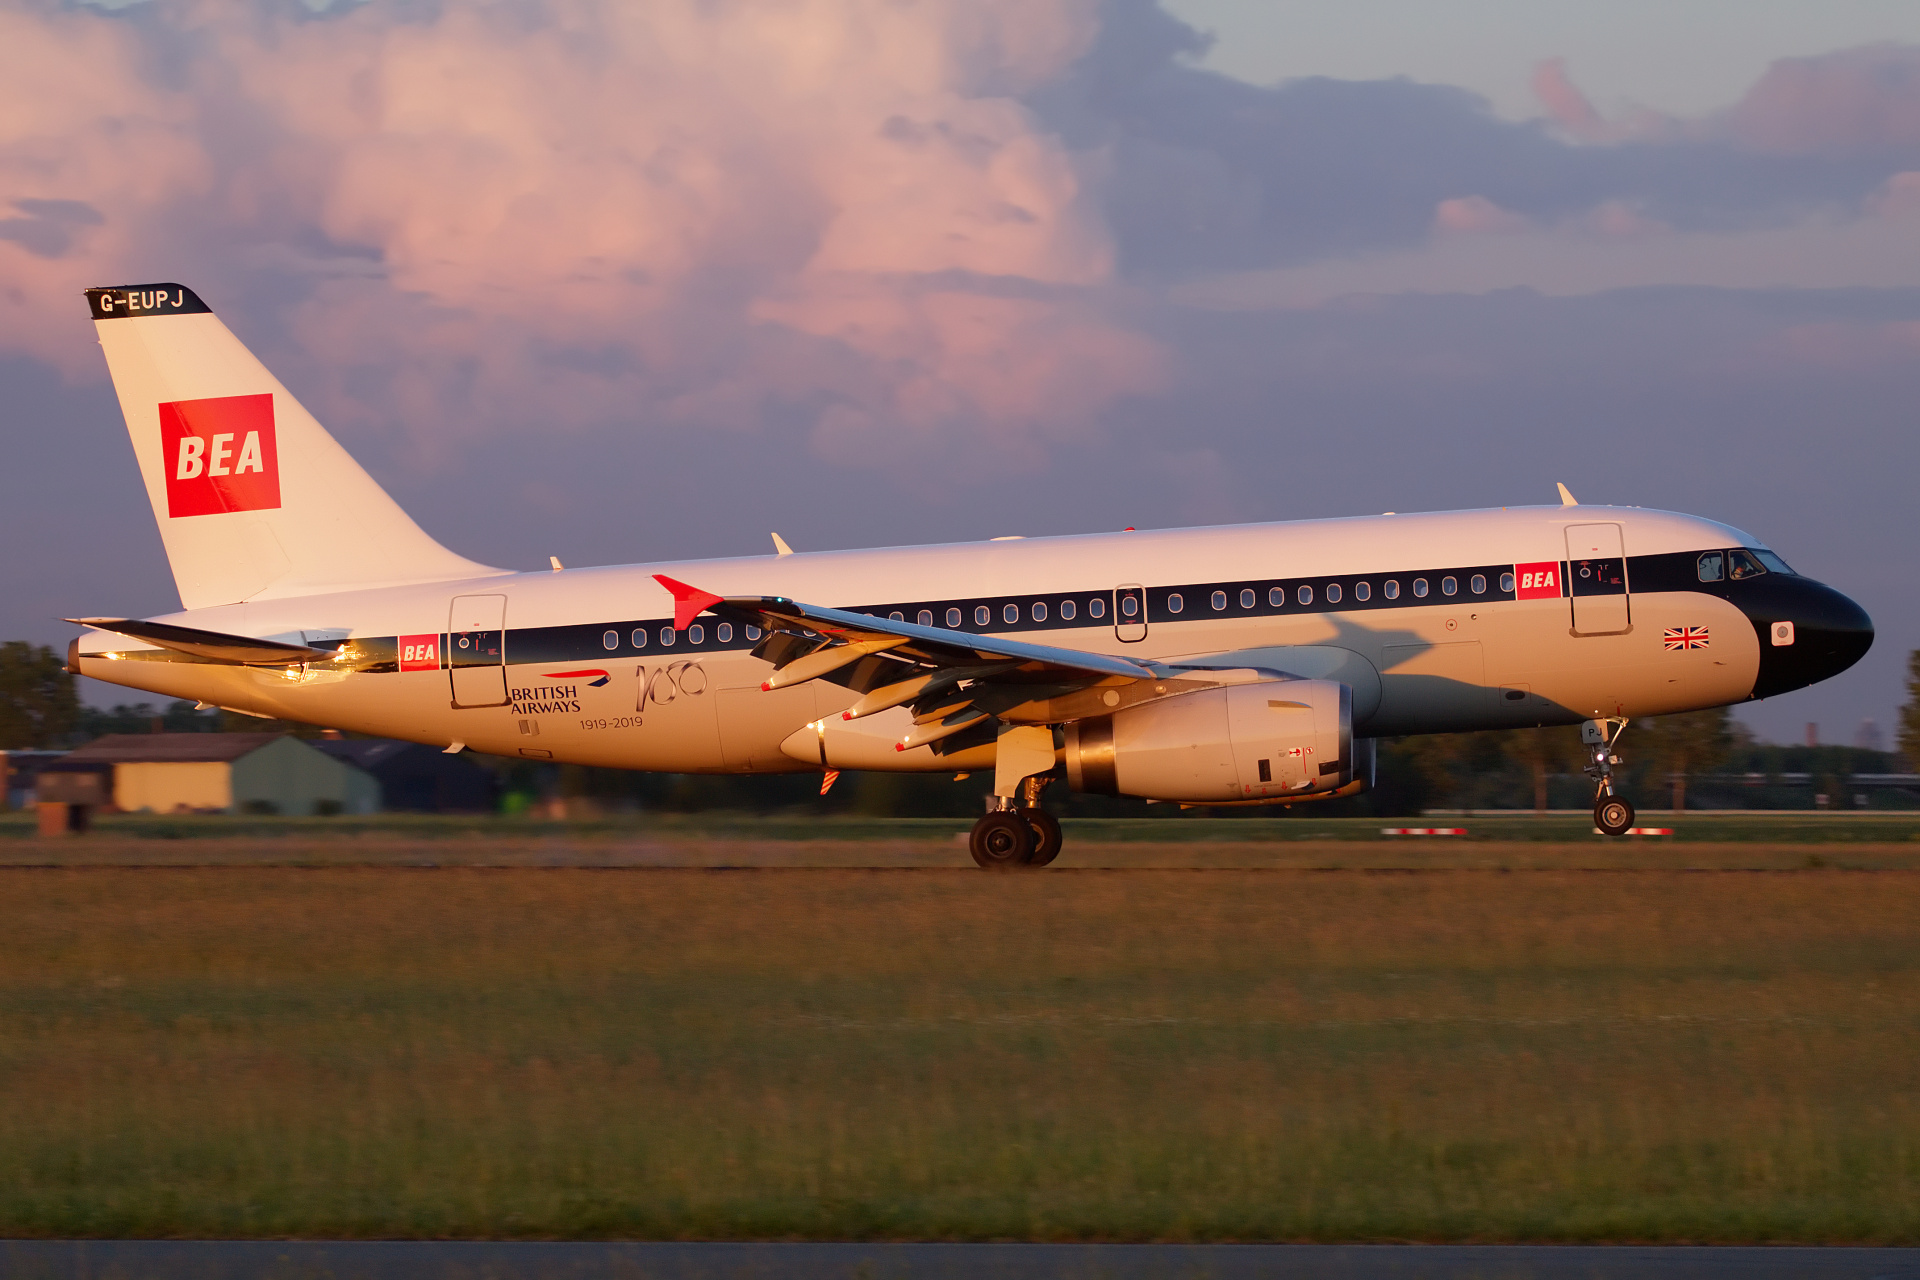 G-EUPJ, British Airways (BEA retro livery) (Aircraft » Schiphol Spotting » Airbus A319-100)